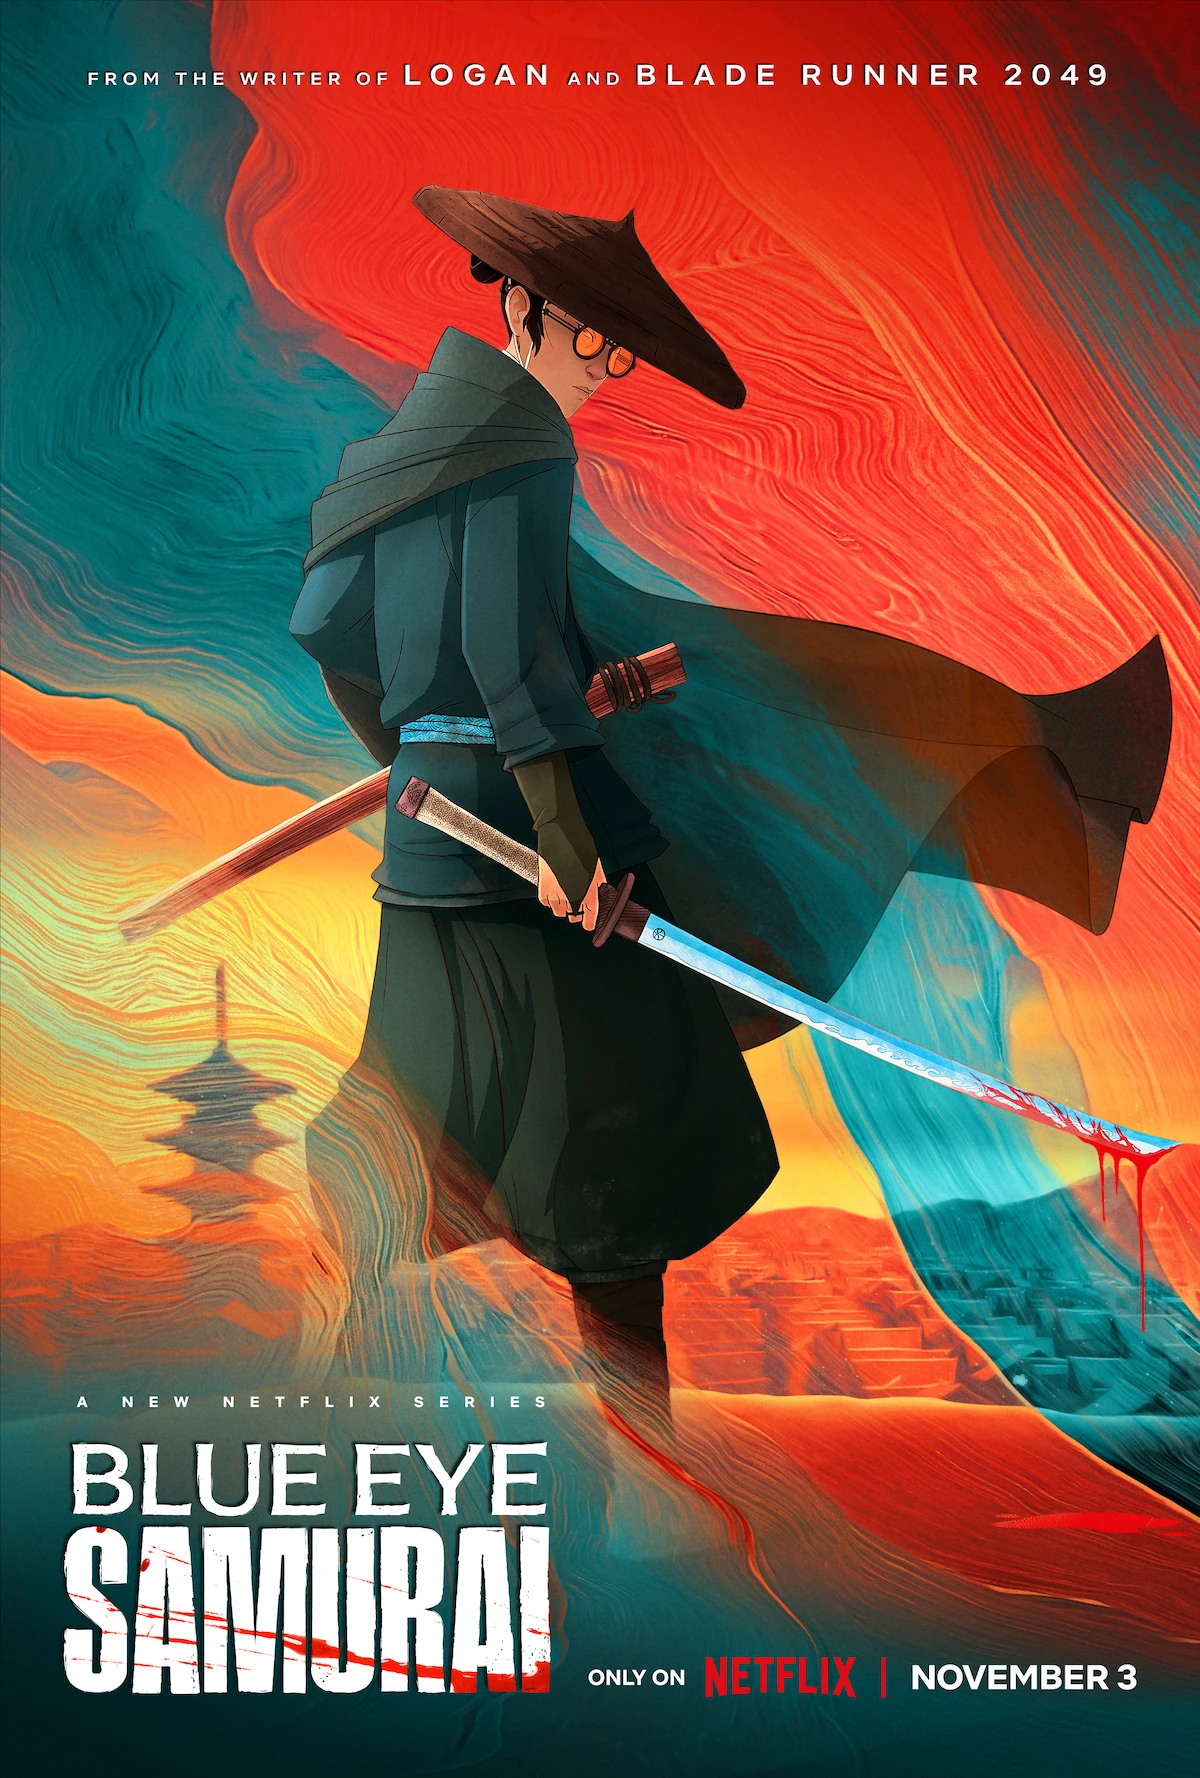 Promotional material for Blue Eyed Samurai